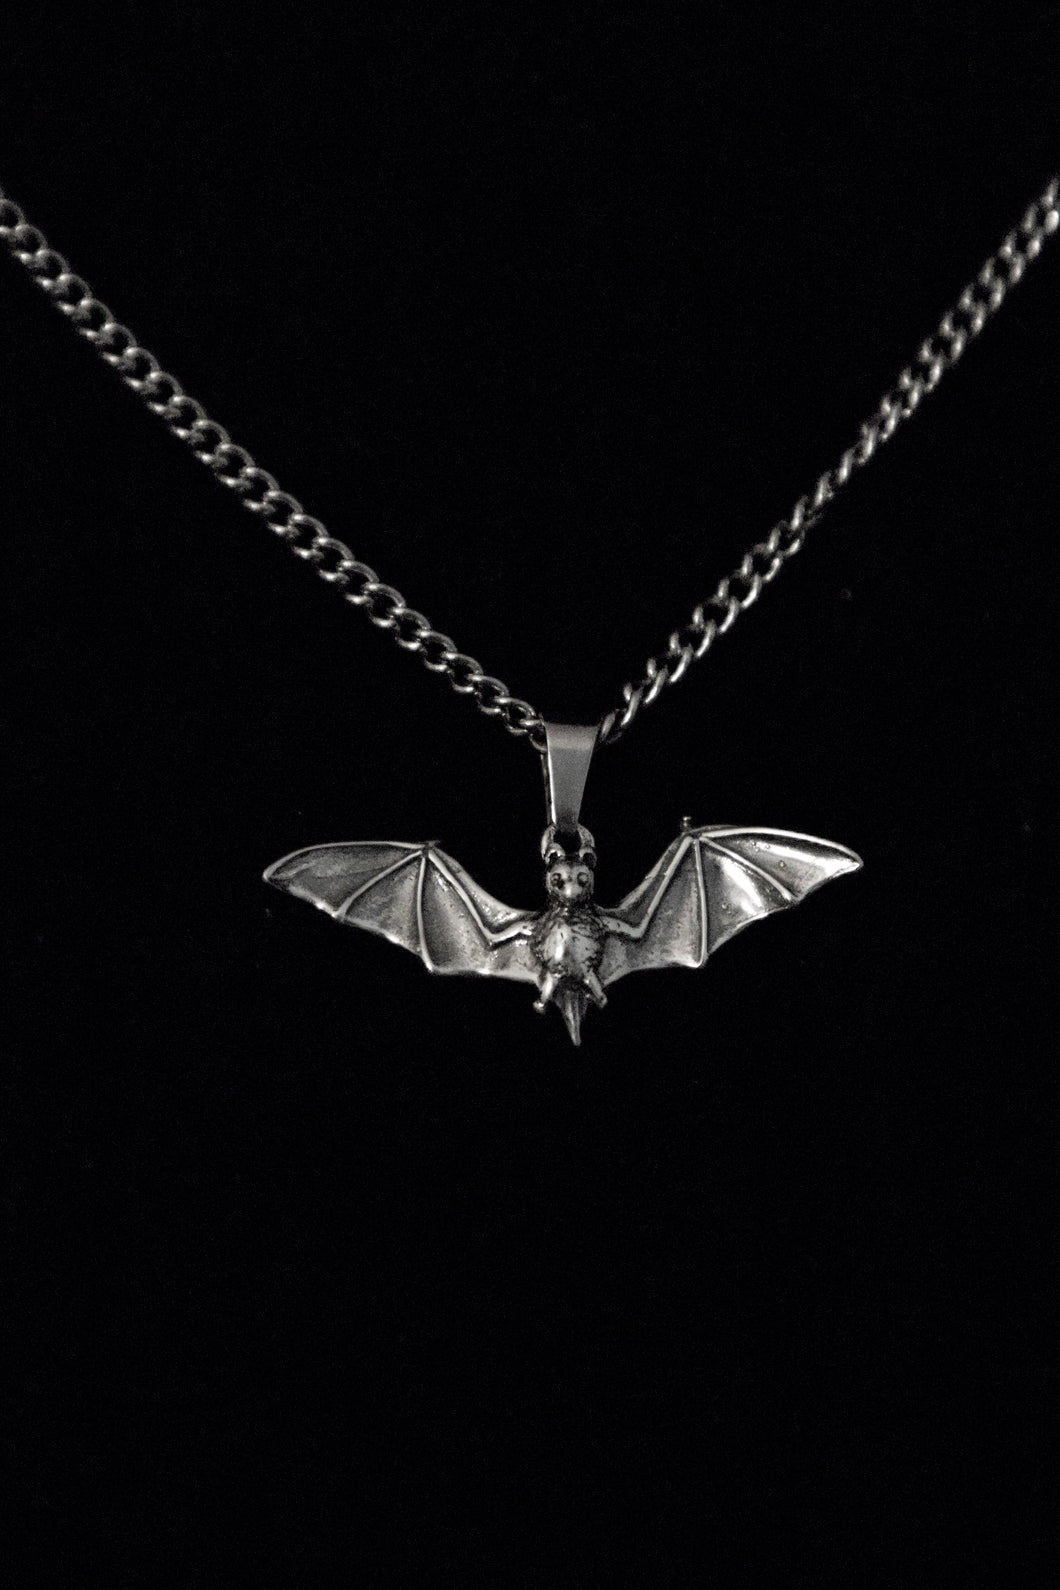 Bat Chain